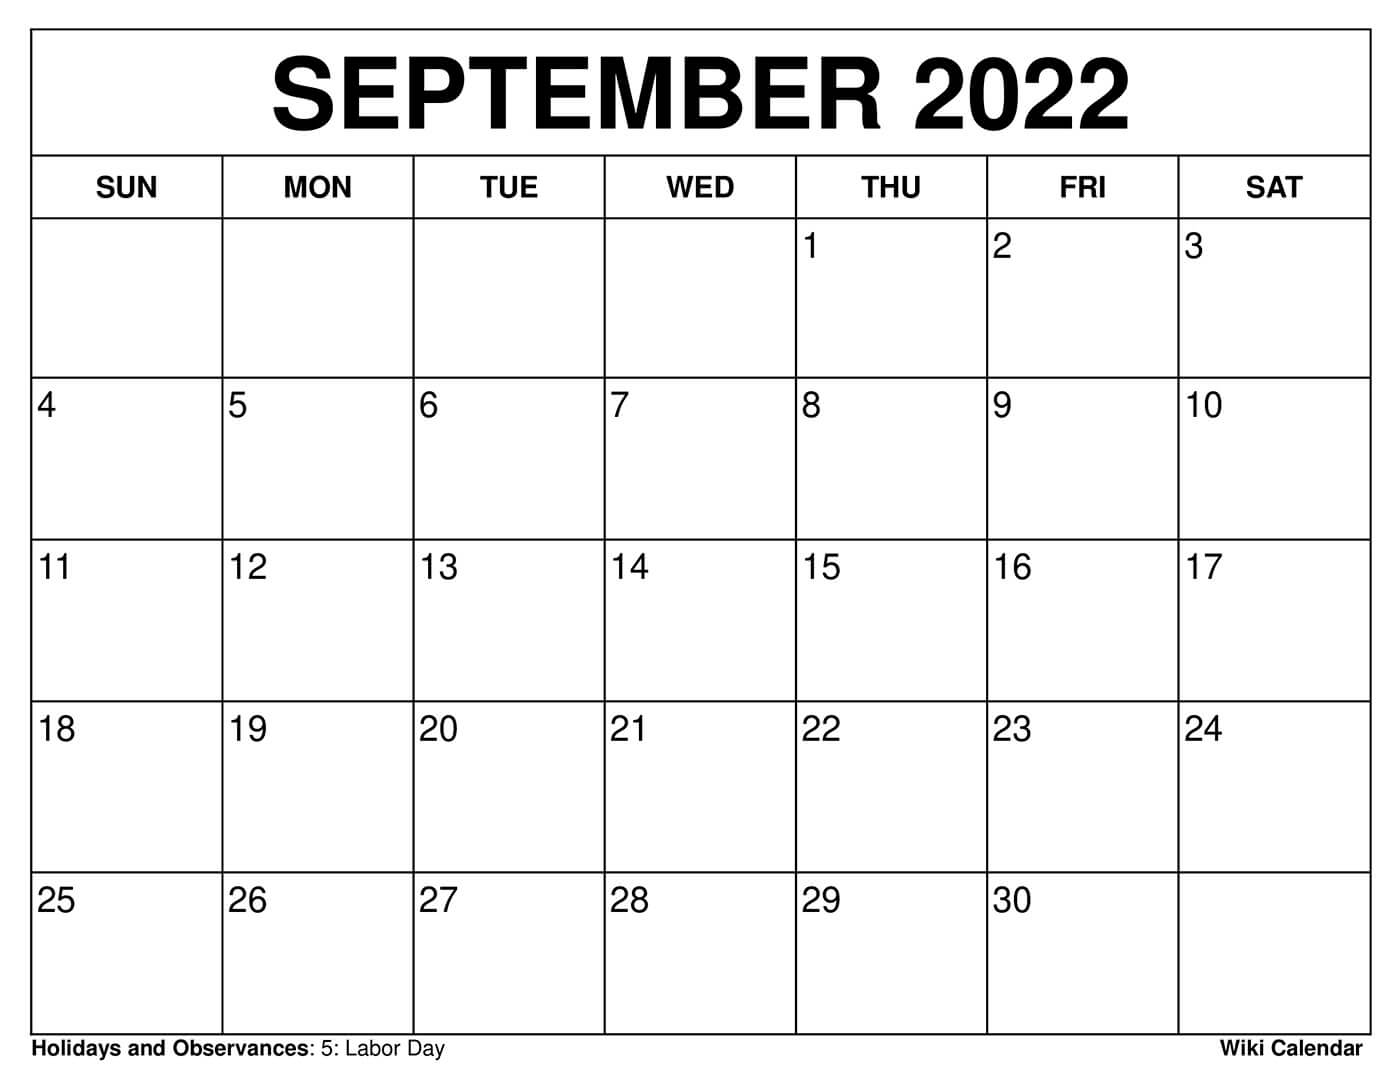 Free Calendar September 2022 Free Printable September 2022 Calendars - Wiki Calendar